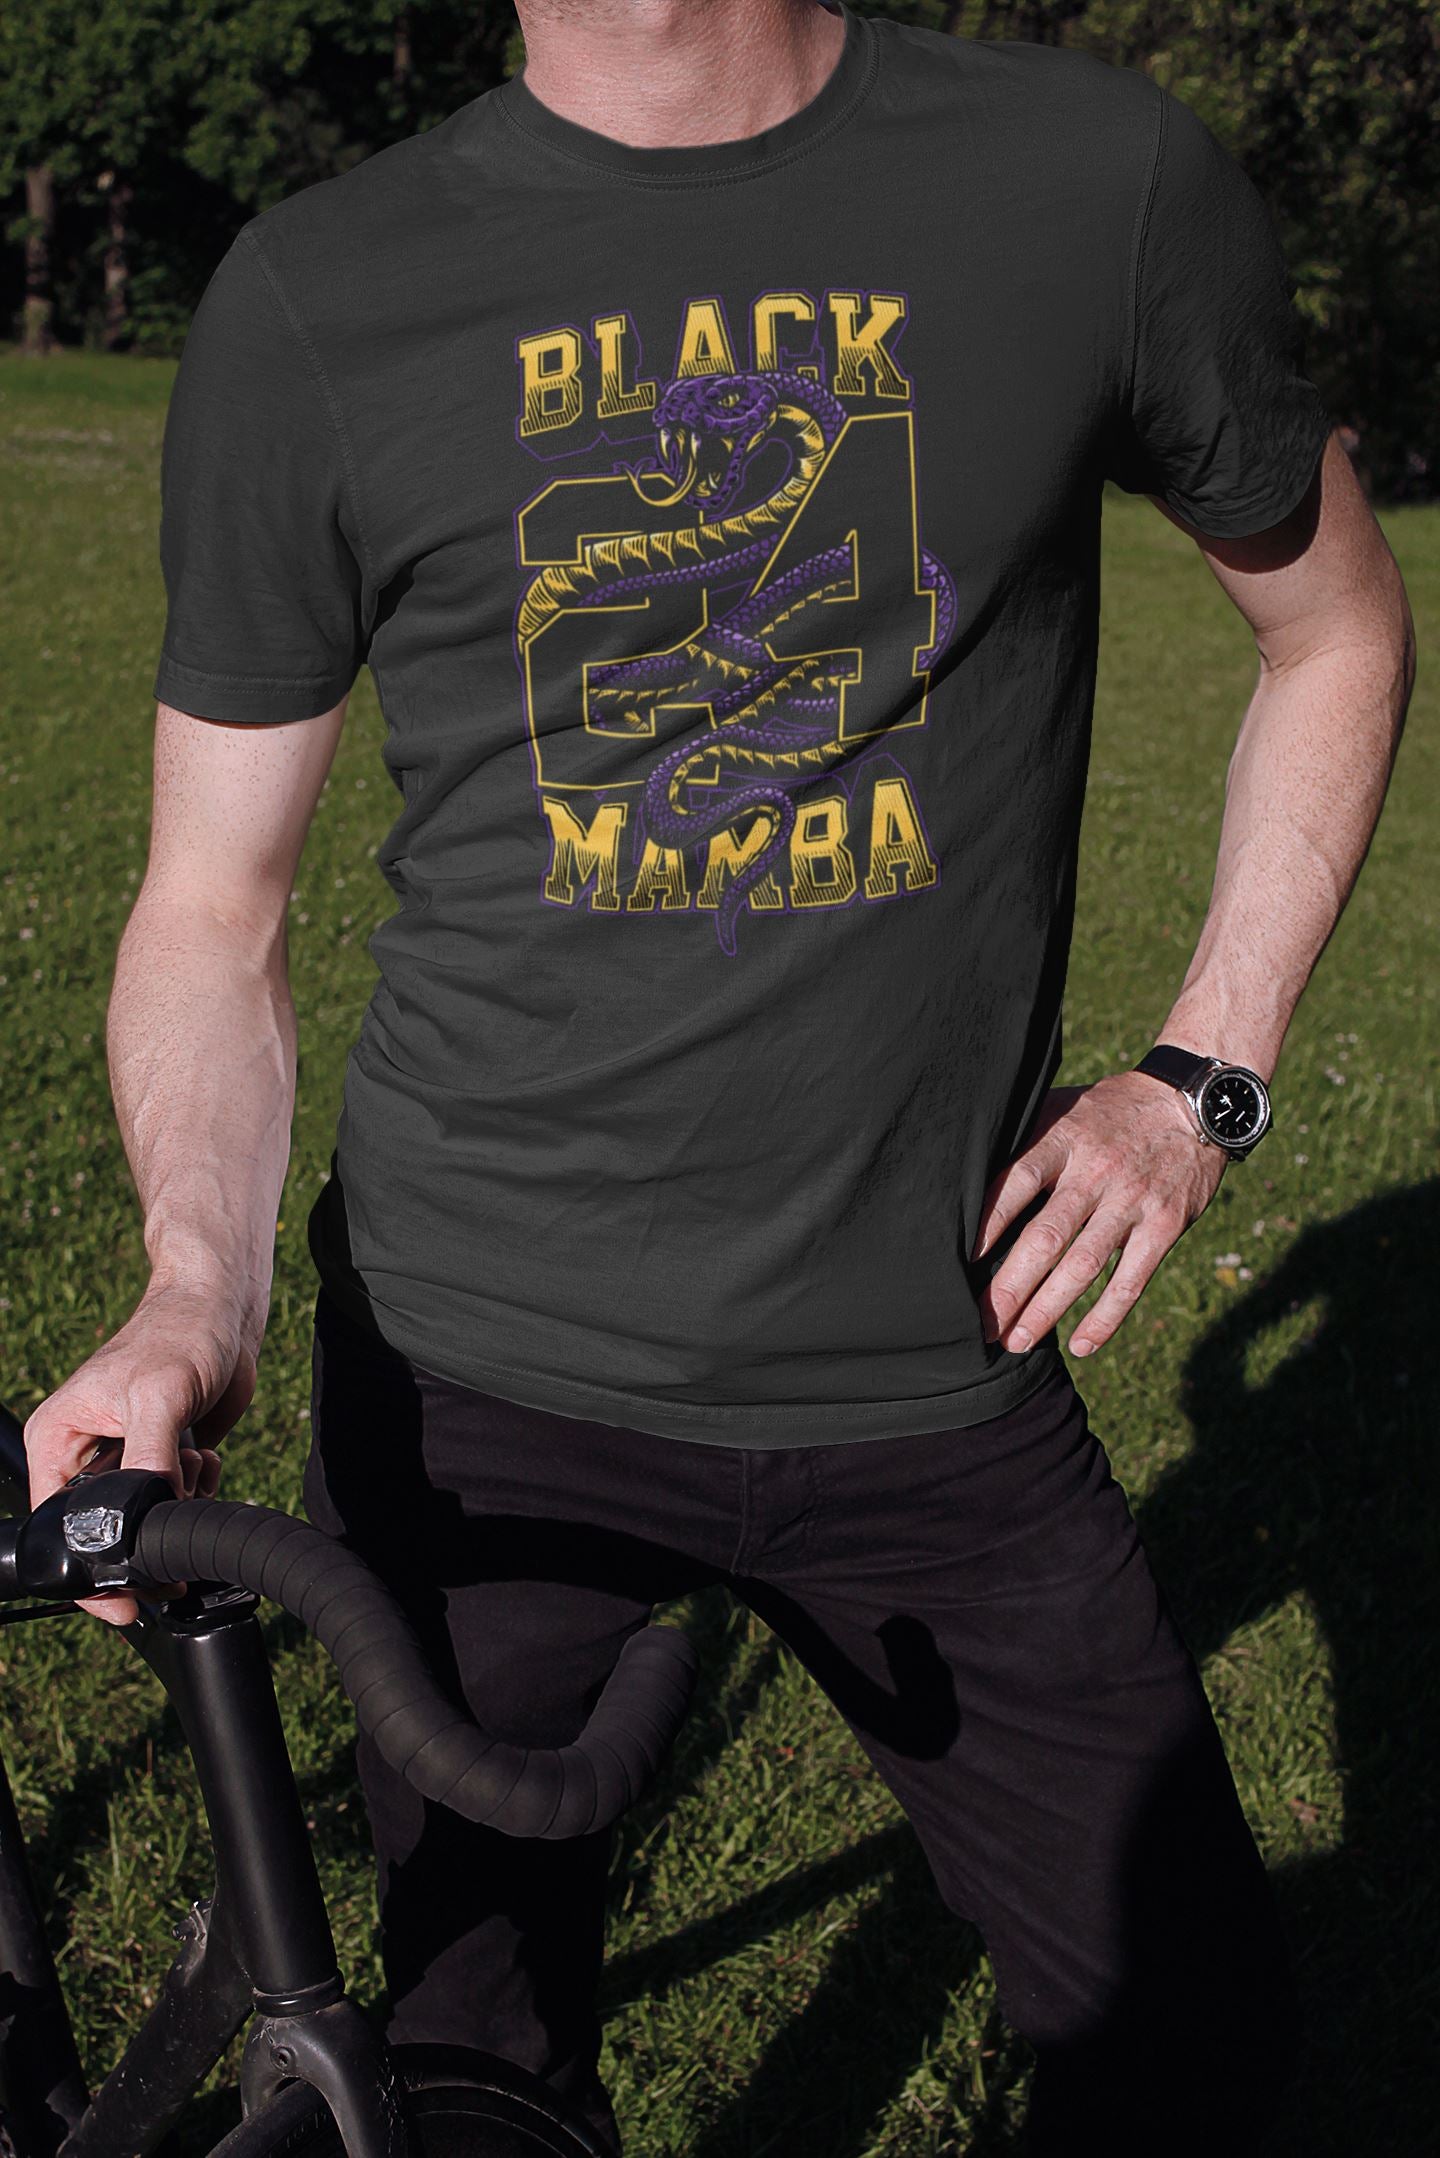 Black Mamba No. 24 Official Kobe Bryant Black T Shirt for Men and Women freeshipping - Catch My Drift India